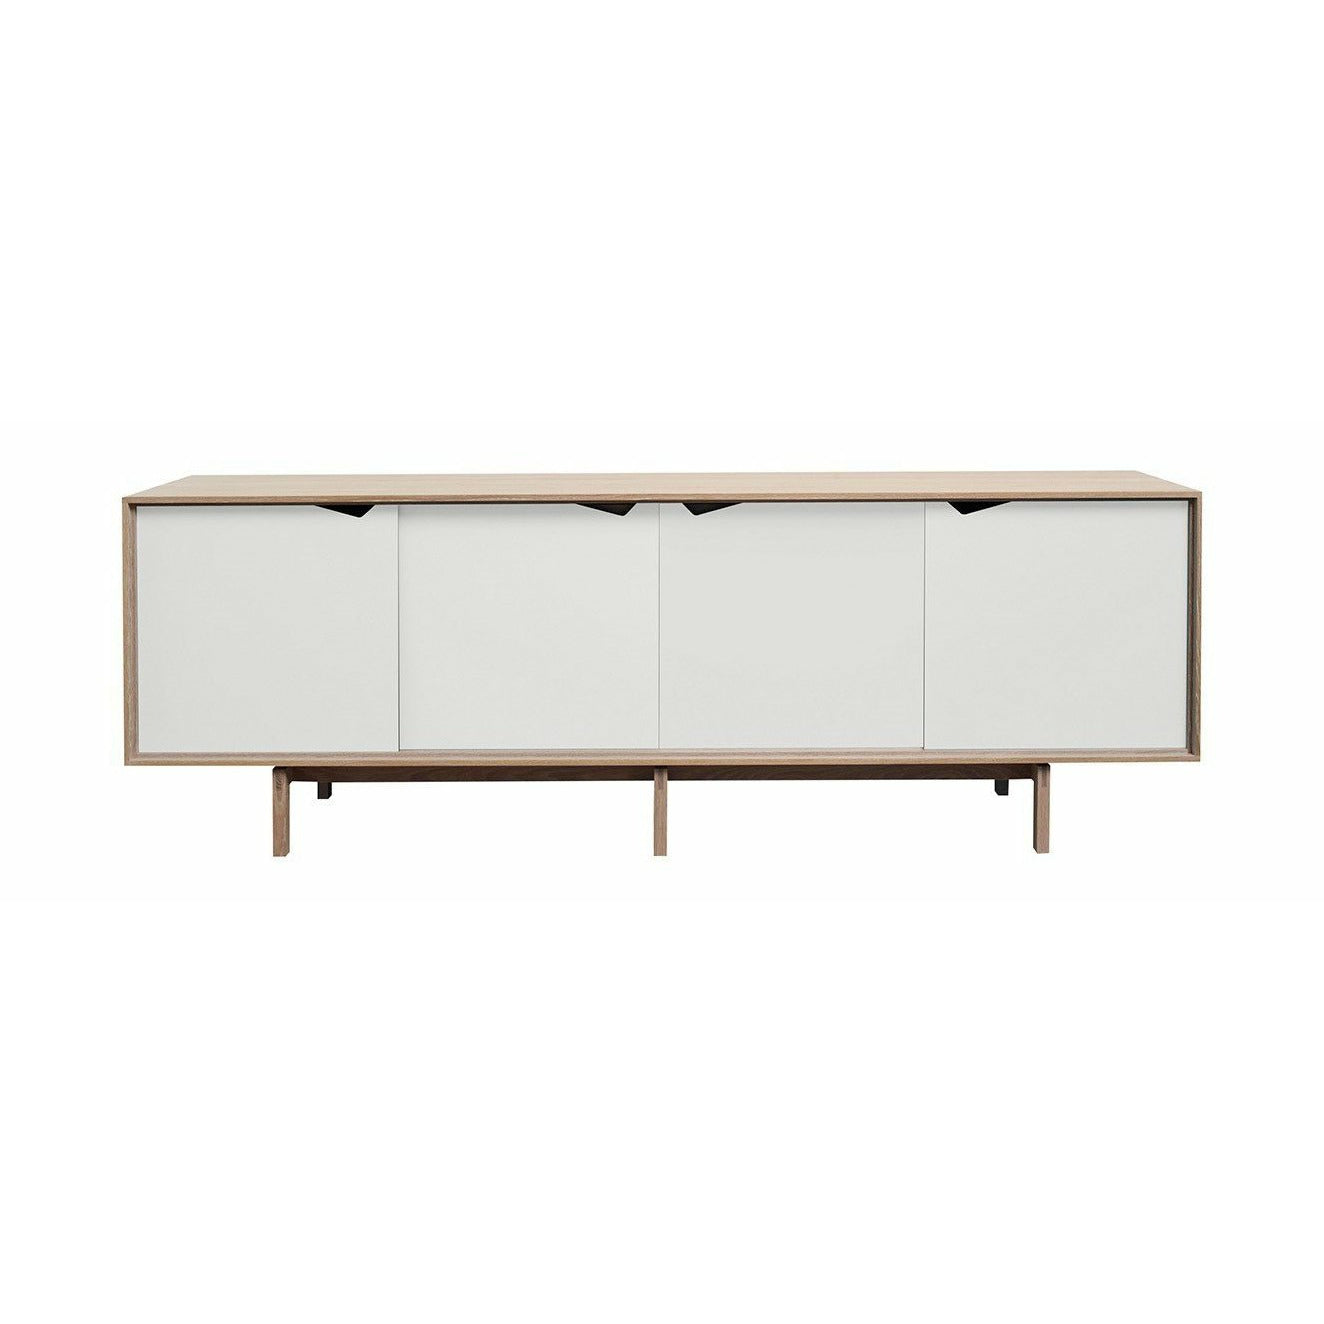 Andersen Furniture S1 på sidoboar tvål ek, vita dörrar, 200 cm